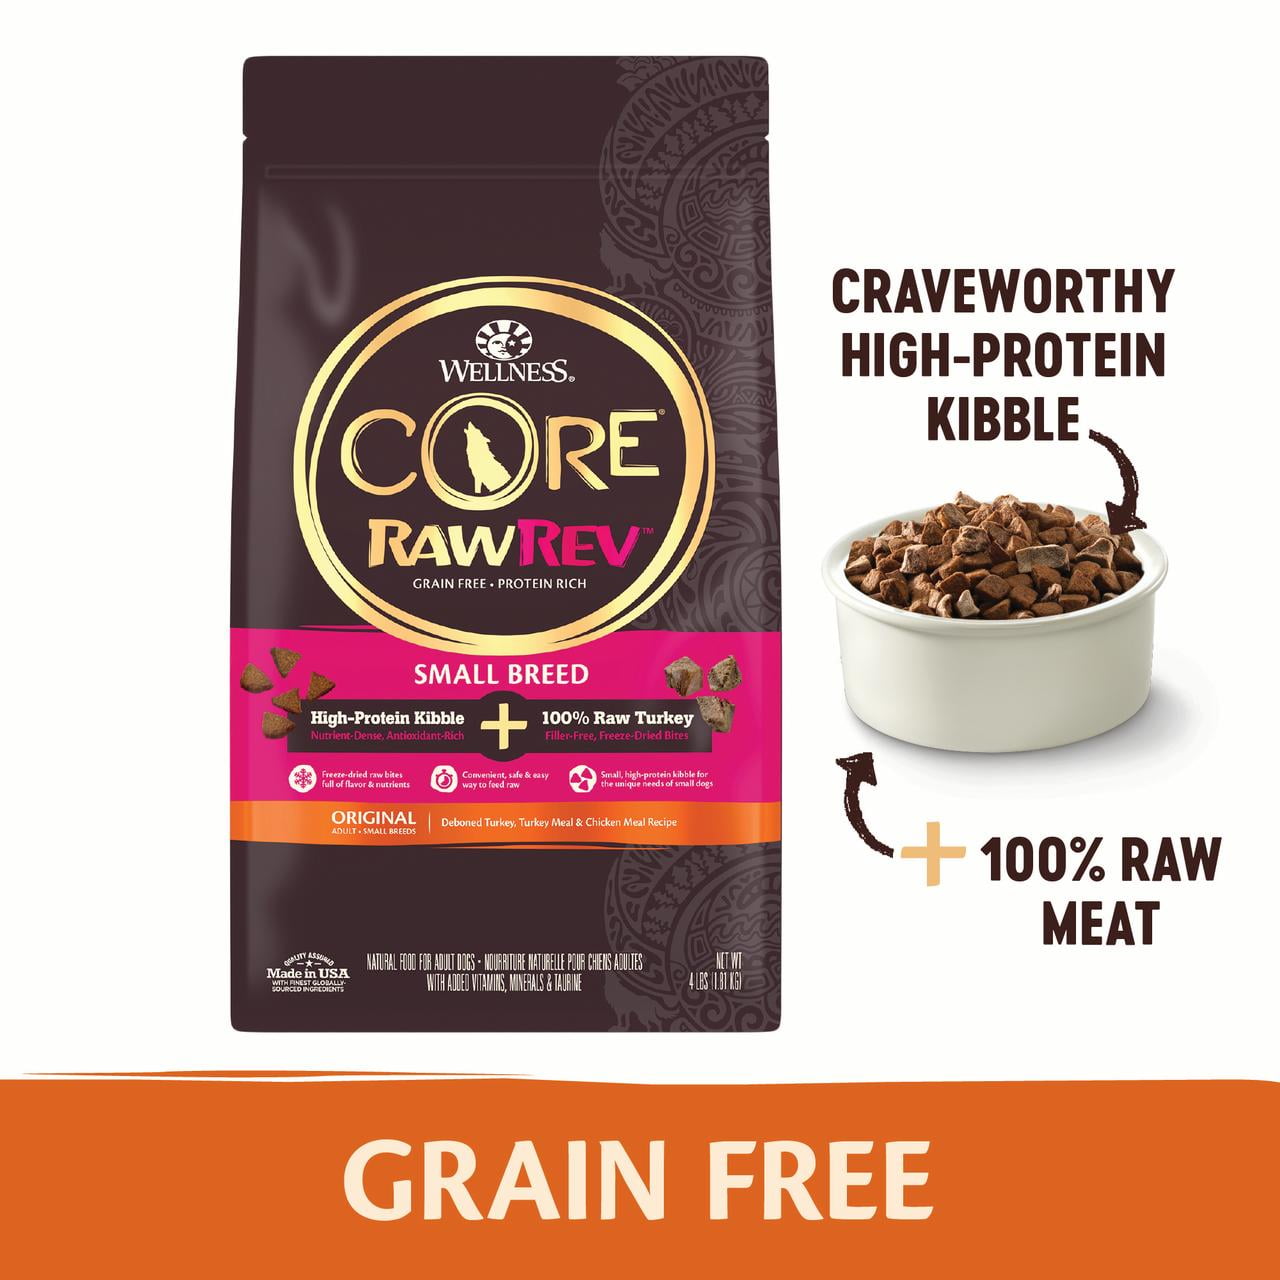 core grain free puppy food